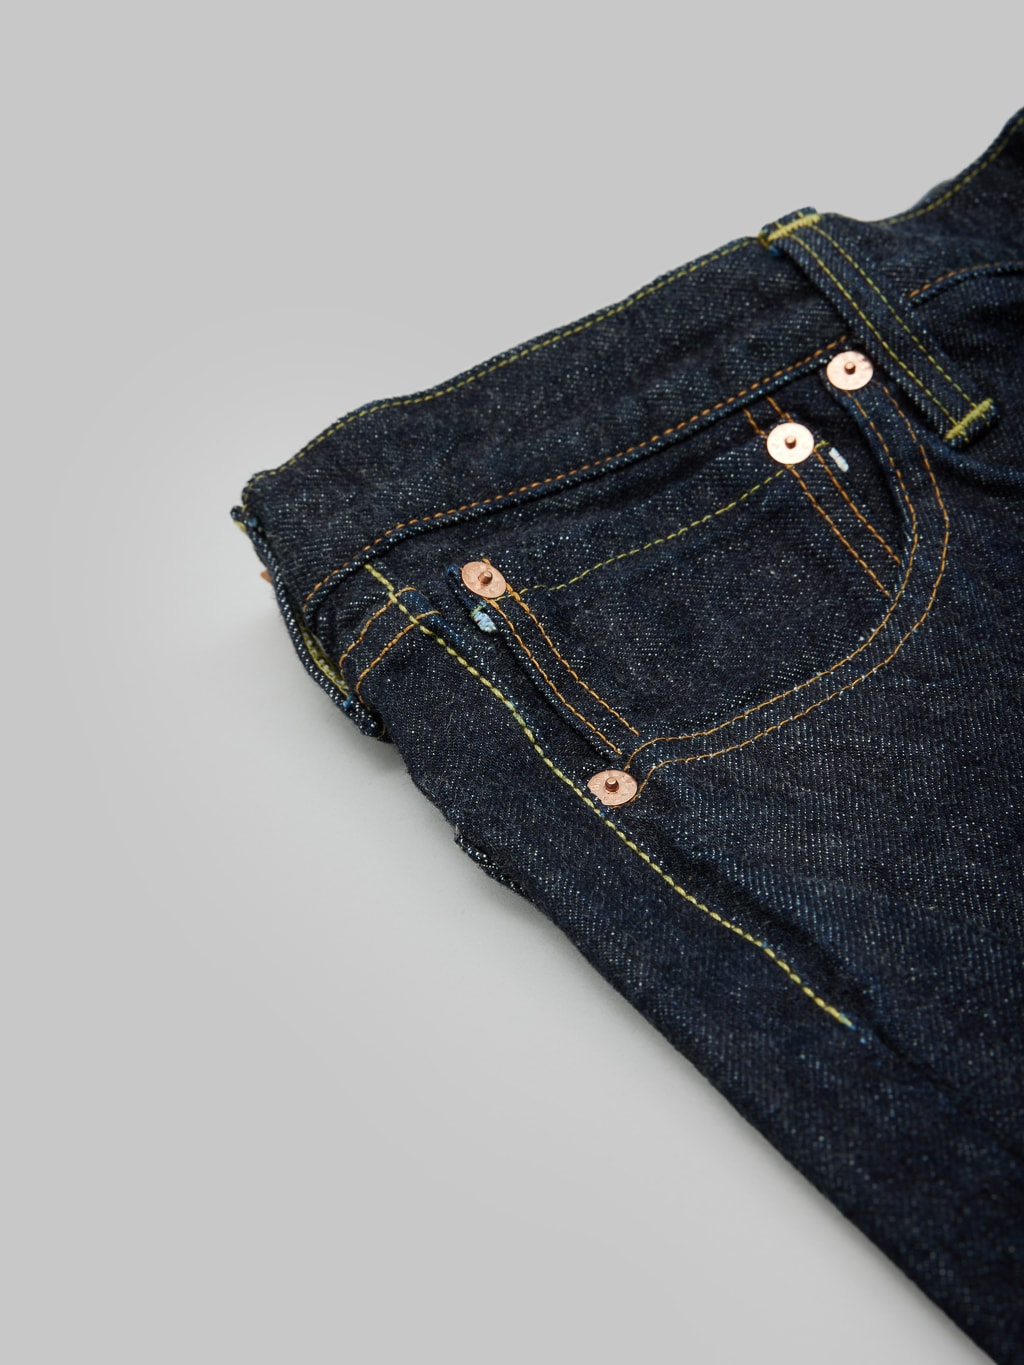 Fob factory slim straight denim jeans coin pocket detail